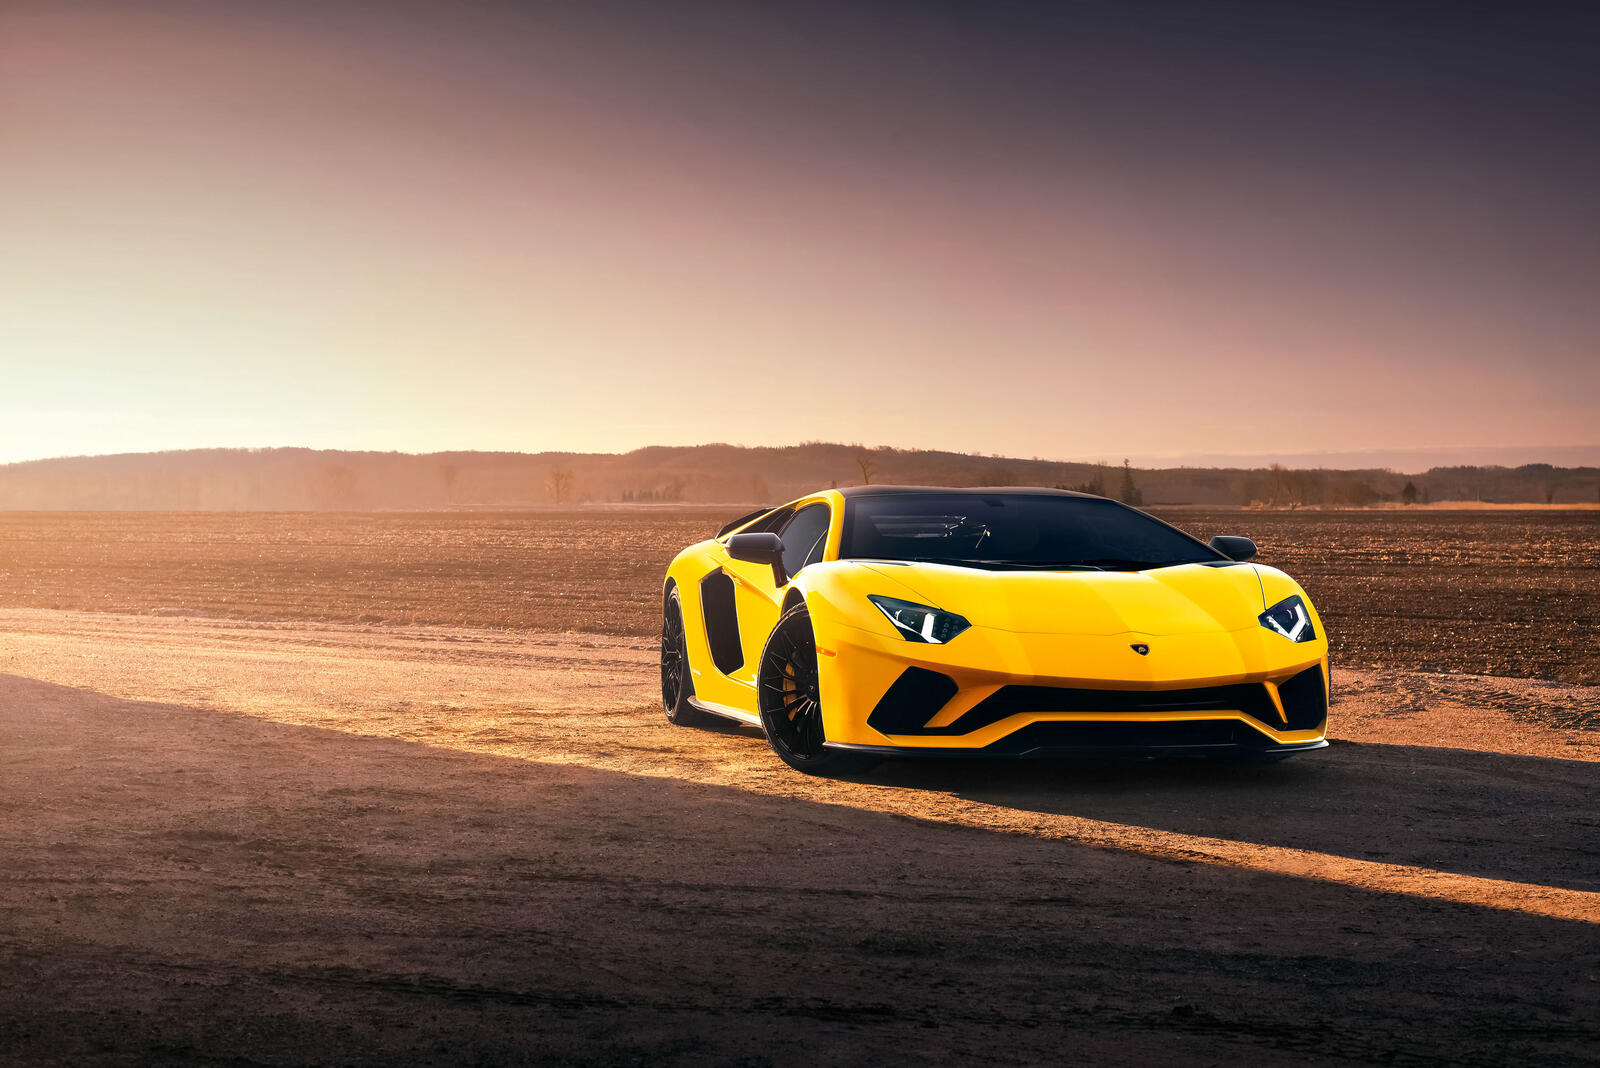 Wallpapers Lamborghini Aventador Behance 2018 cars on the desktop